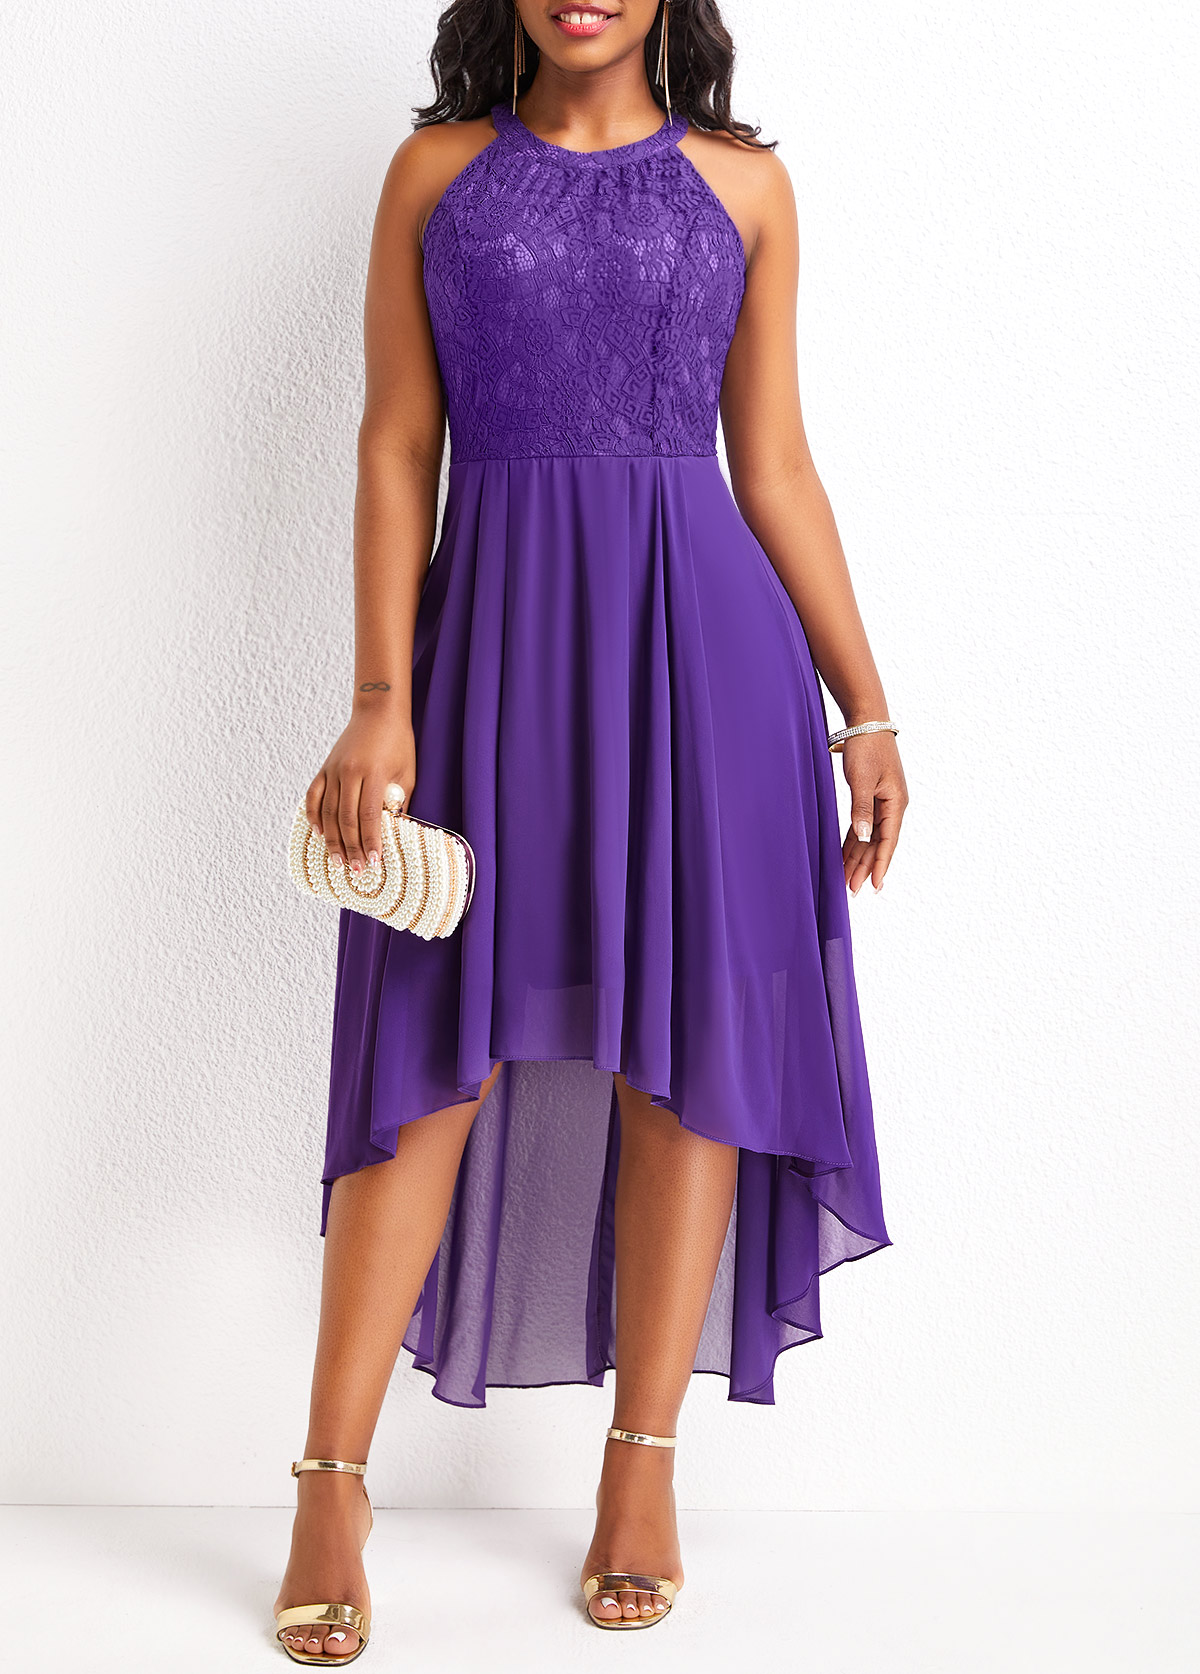 Round Neck Lace Purple High Low Sleeveless Dress | Rosewe.com - USD $39.98